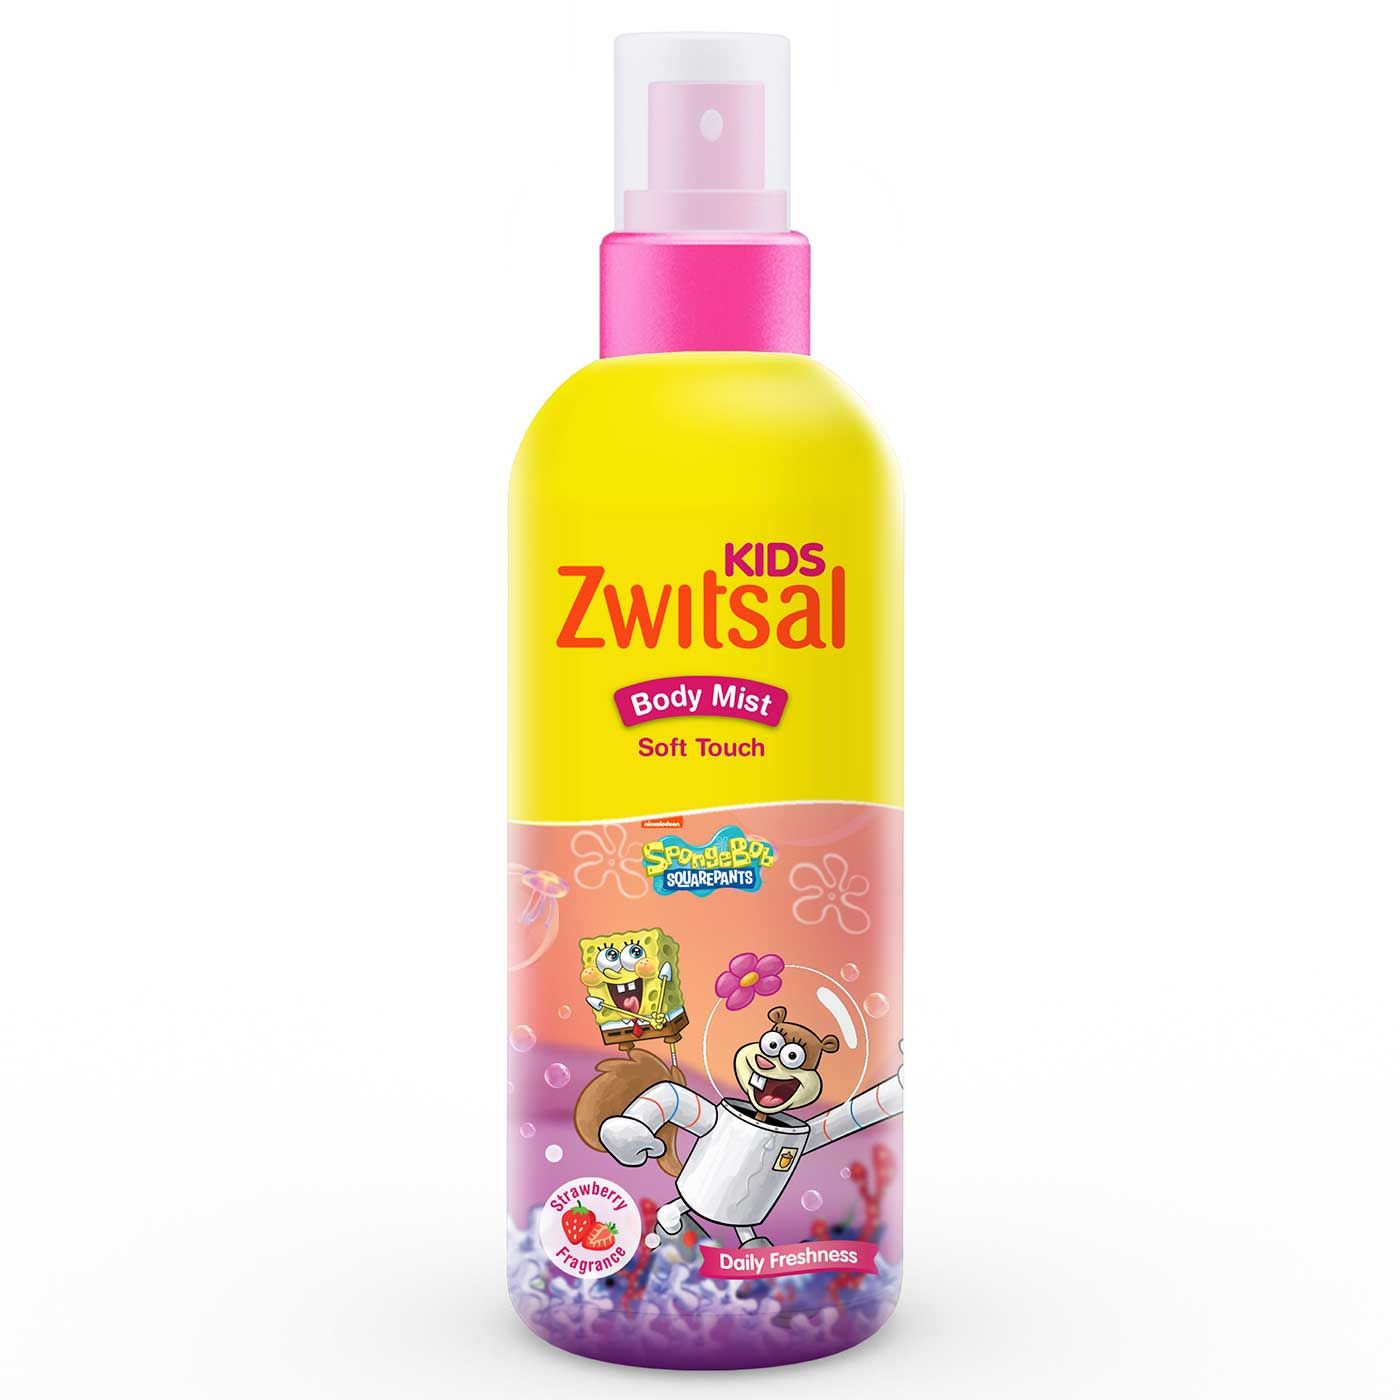 Zwitsal Kids Body Mist Soft Touch 100ml - 3